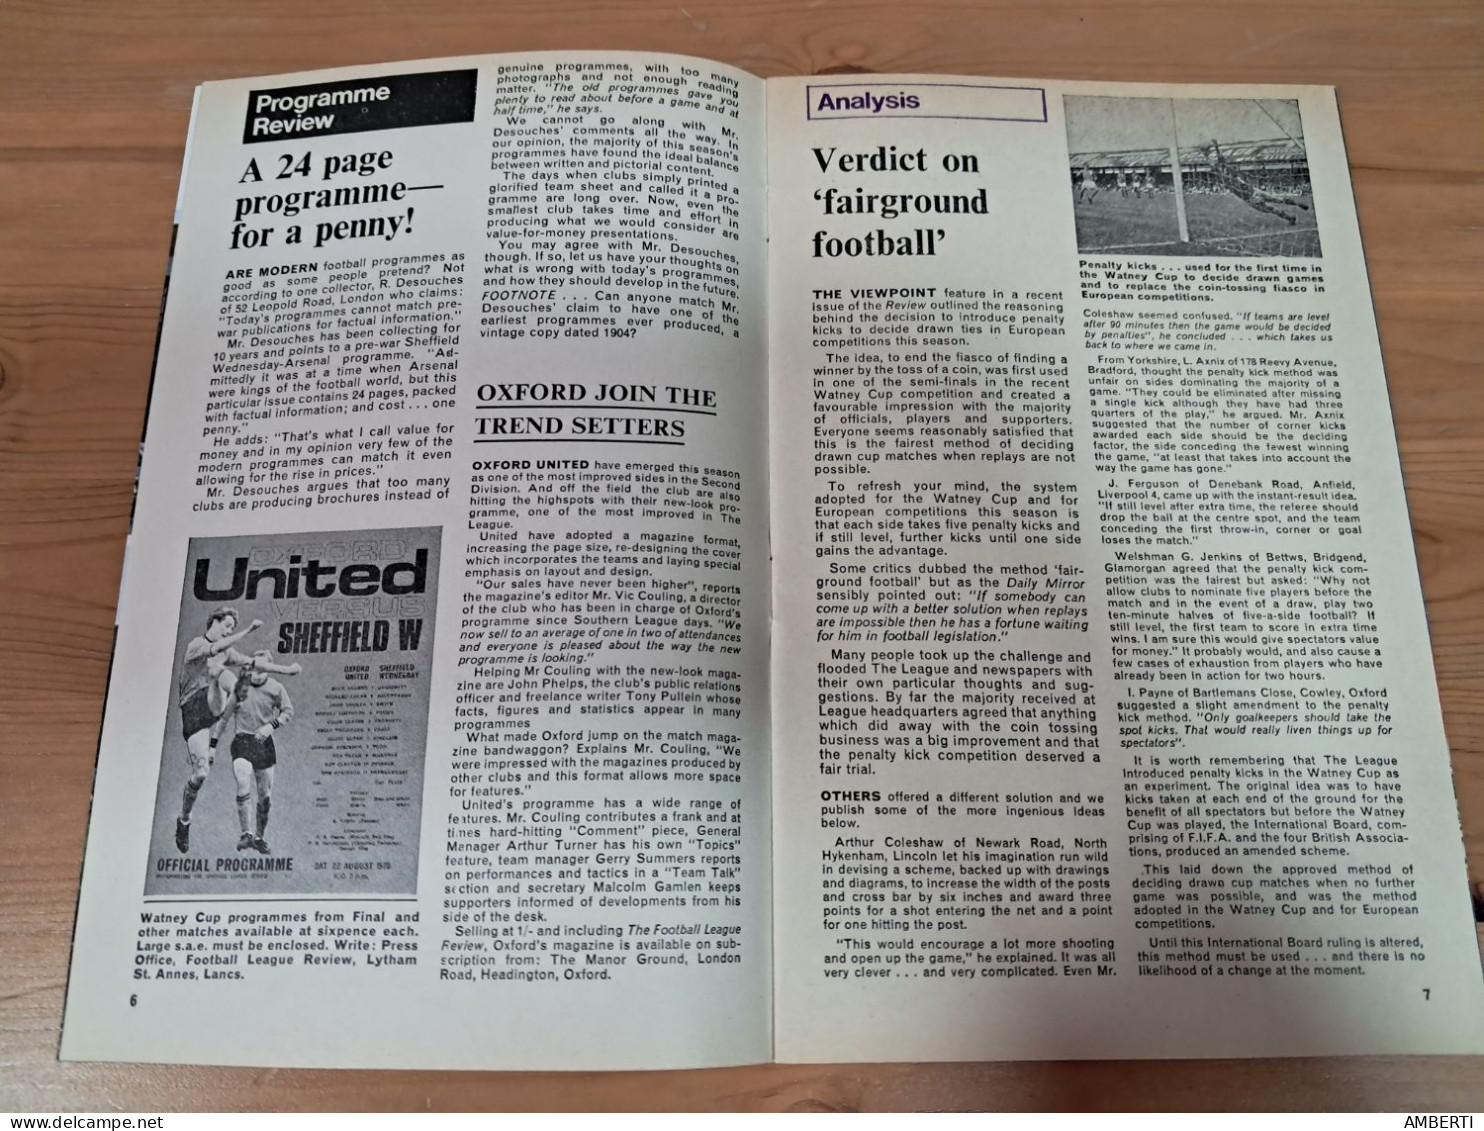 Football League Review Poster Tottenham 1970/71 - Deportes